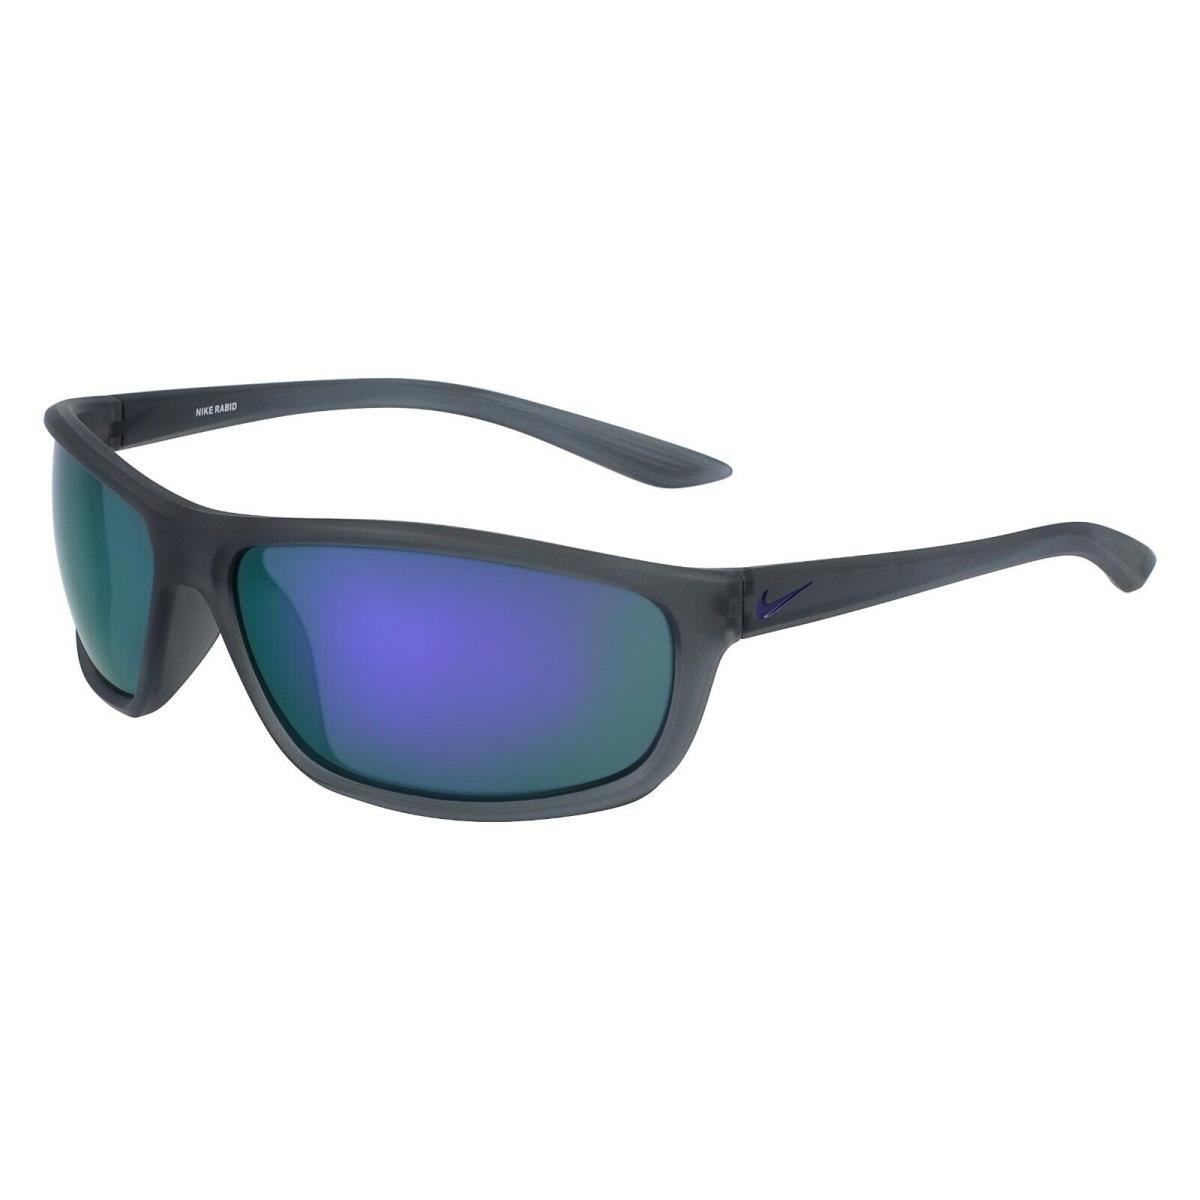 Nike sunglasses Rabid - Matte Anthracite Frame, Grey /VioletMirror Lens 2